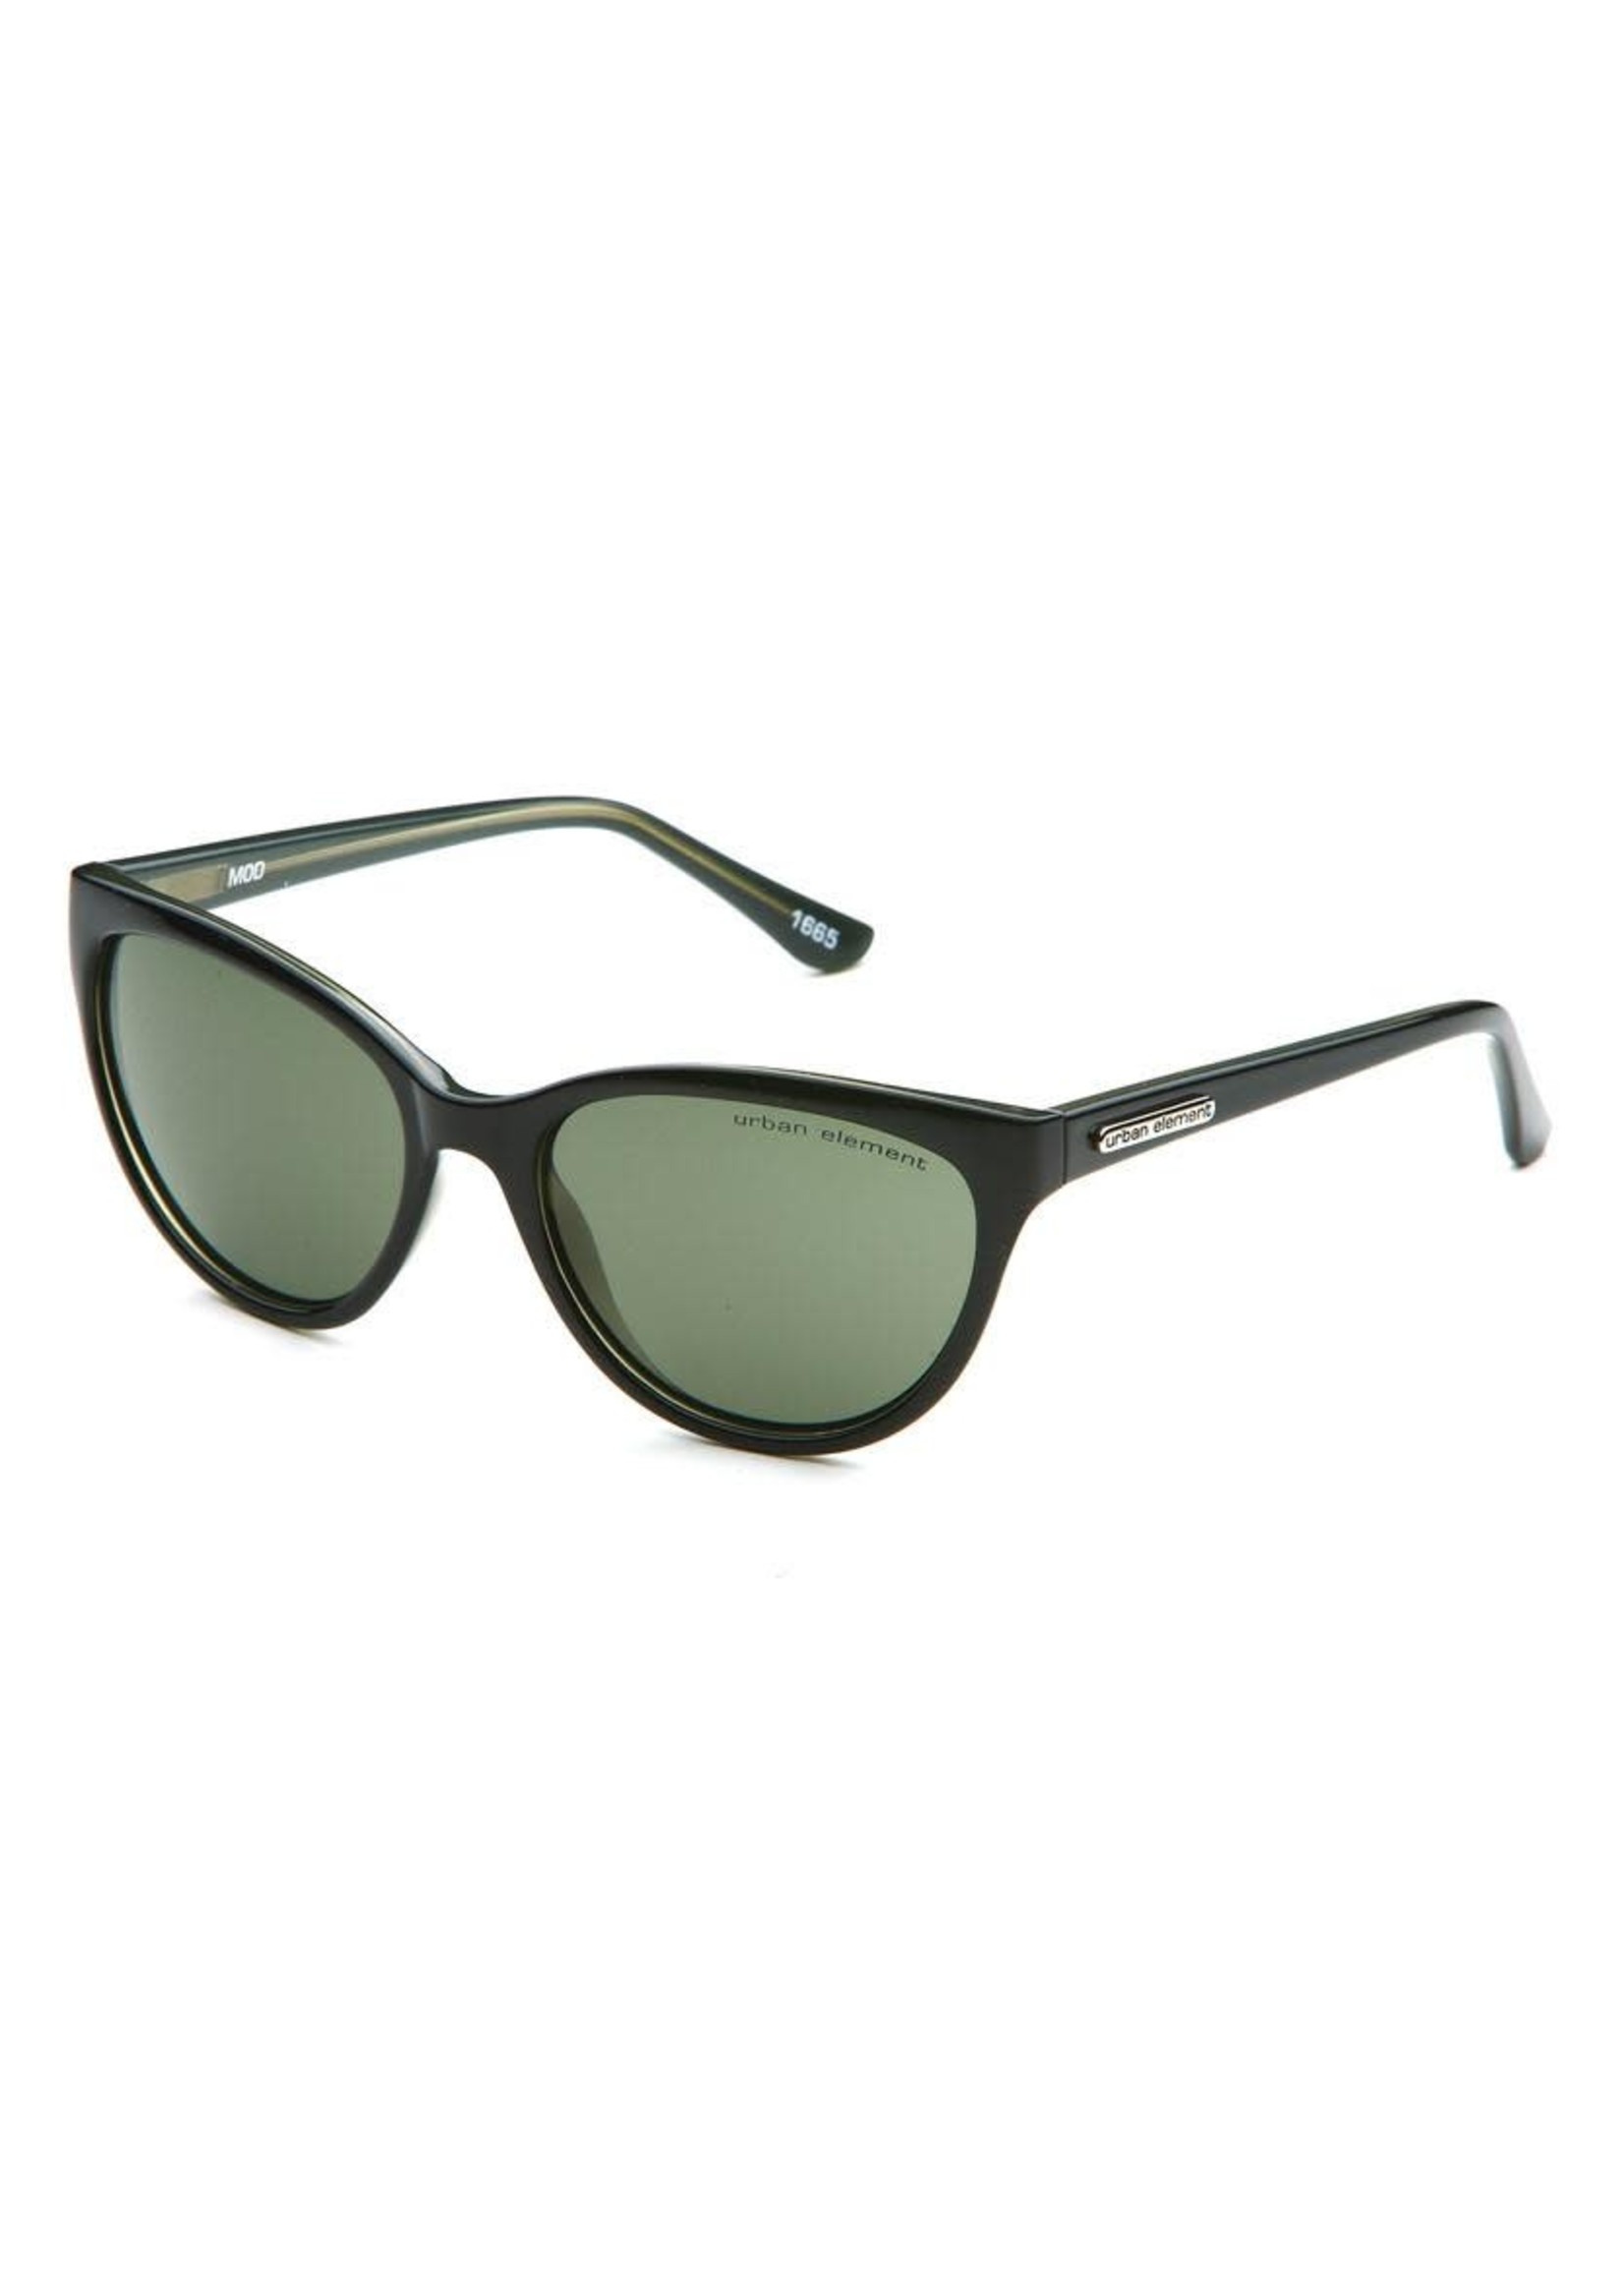 Urban Element Premium Sport Sunglasses Women's - Pure Outdoors